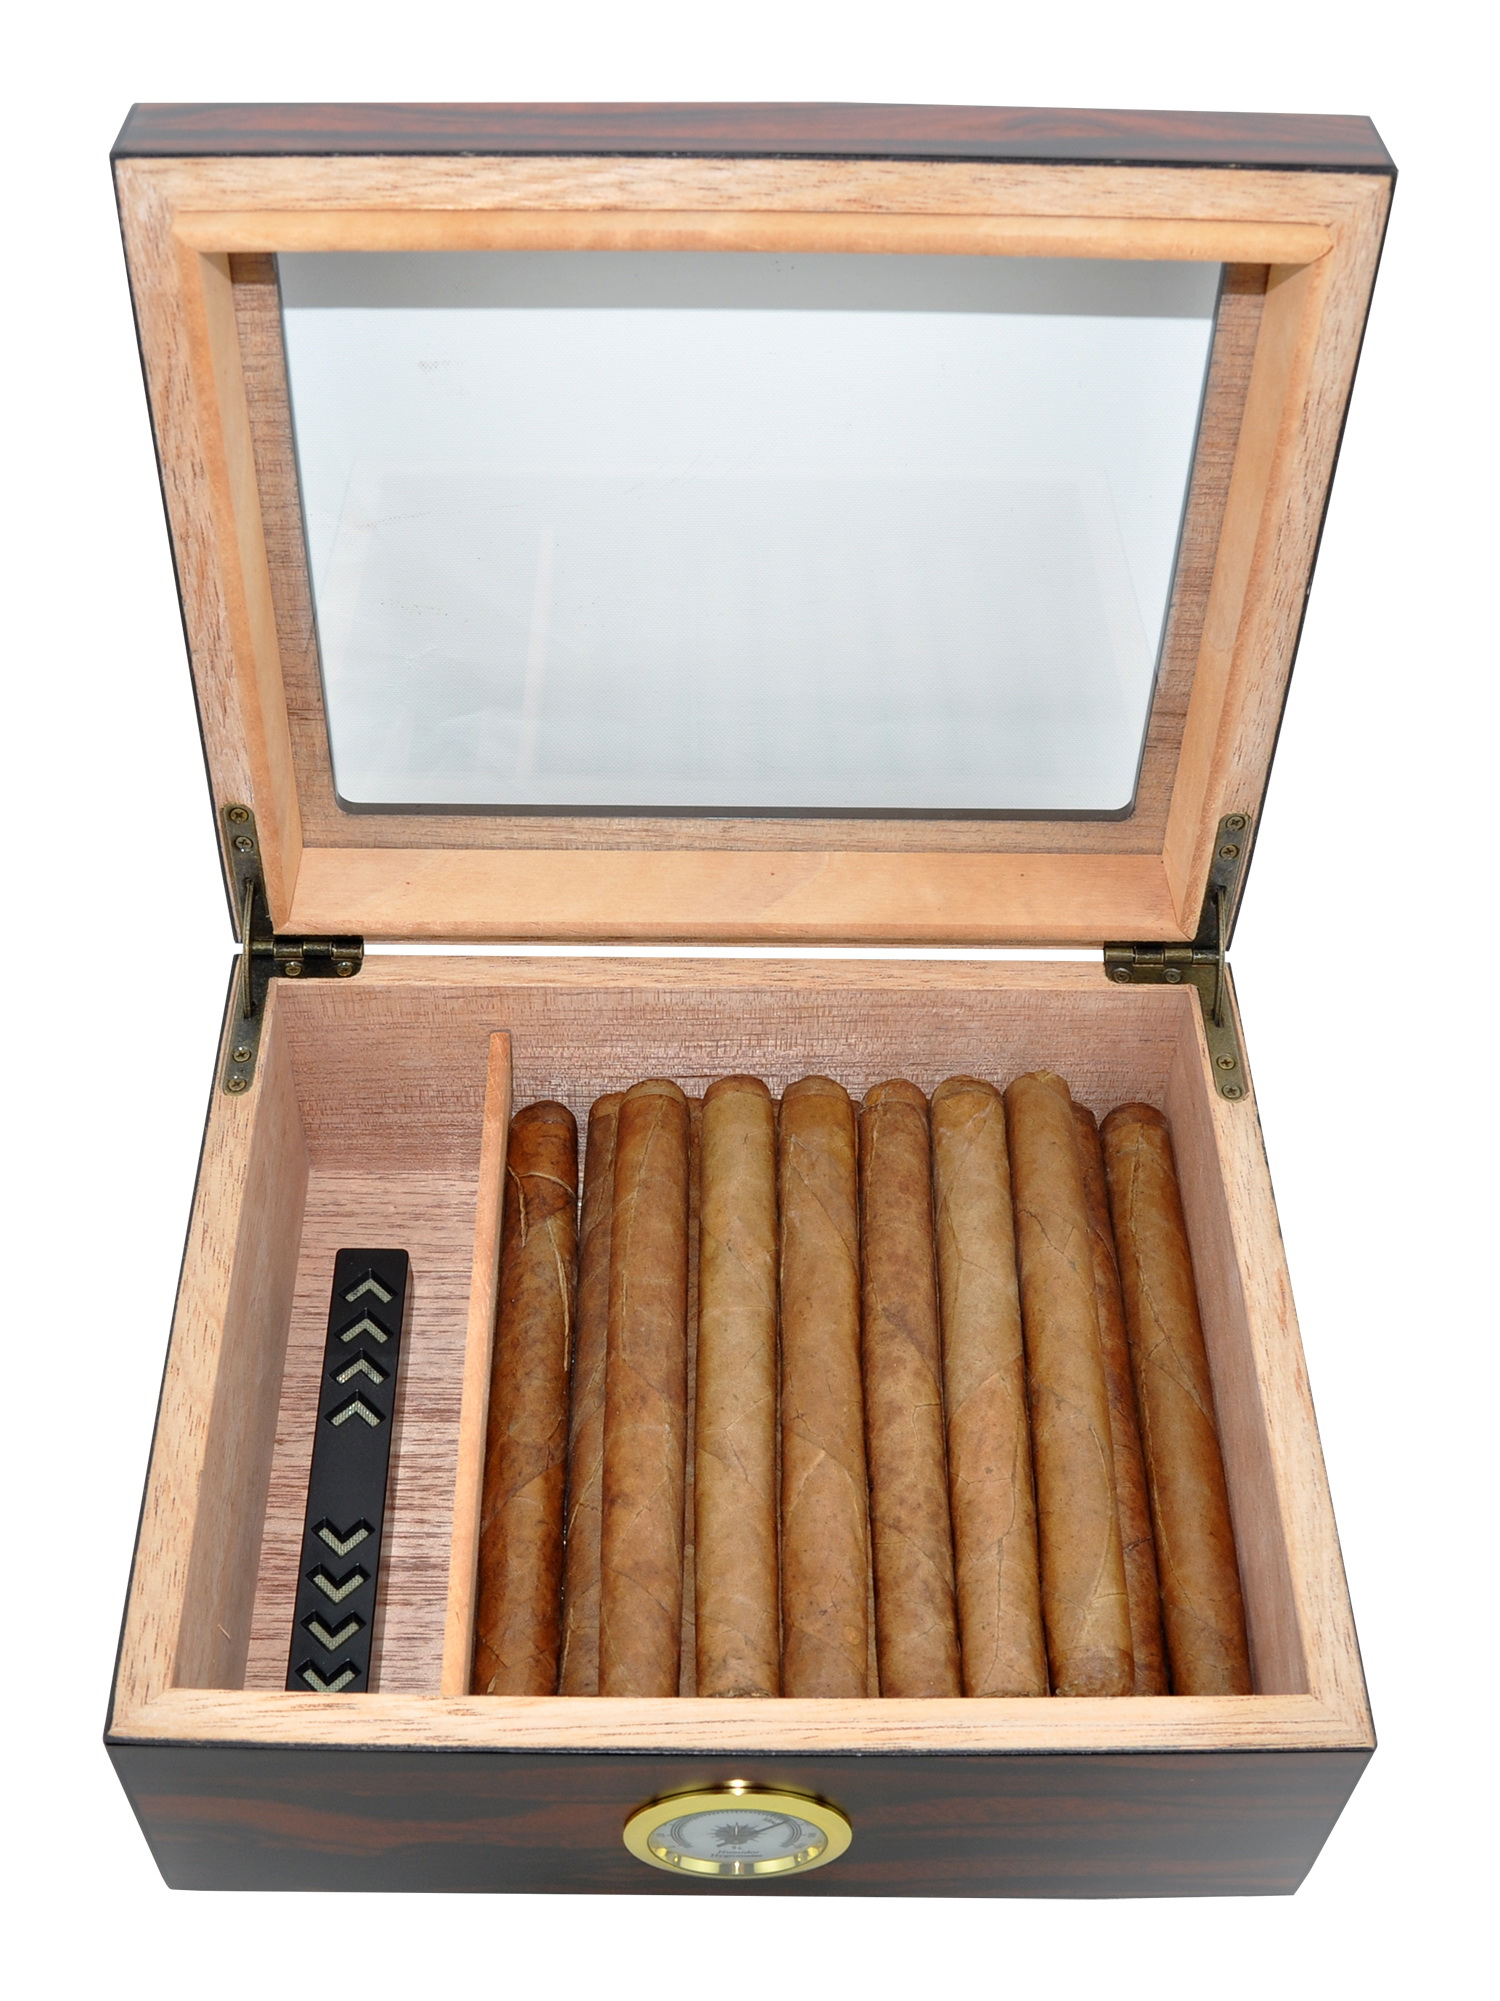 DUCIHBA Humidor Box - Holds 25-50 Cigars - Tempered Glass Display - Spanish Cedar Wood - Brown Color - image 3 of 7